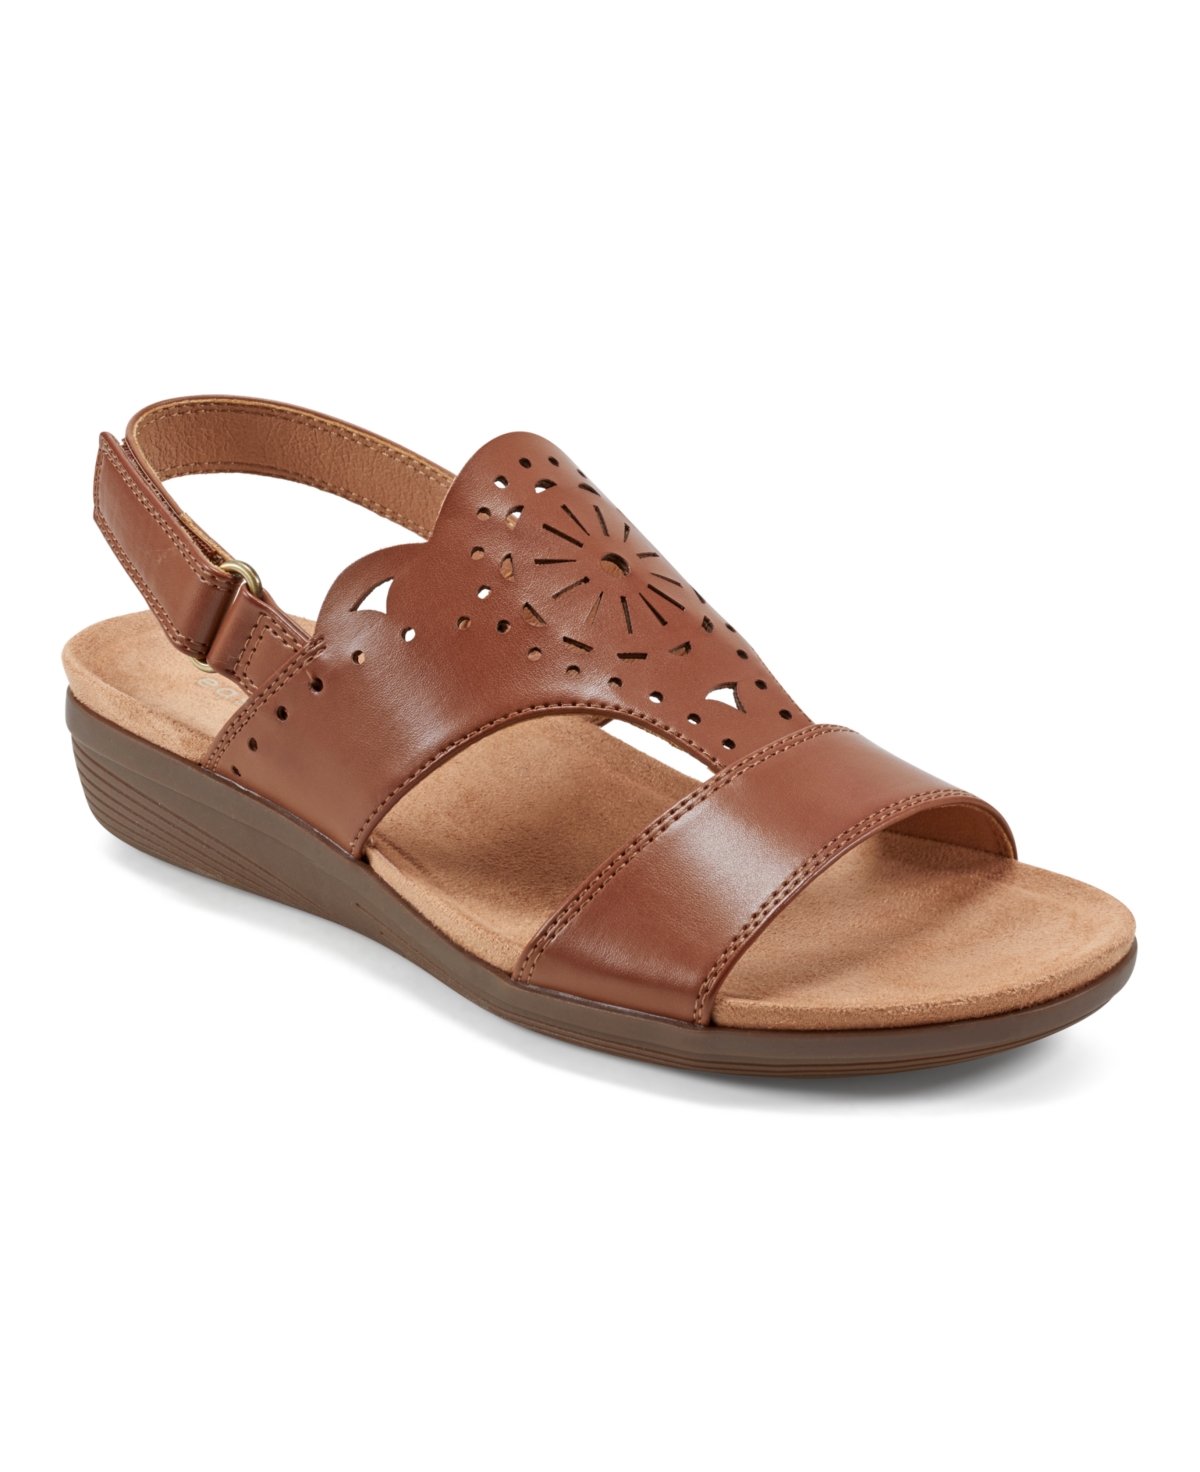 Women's Burlie Round Toe Slingback Casual Sandals - Medium Brown